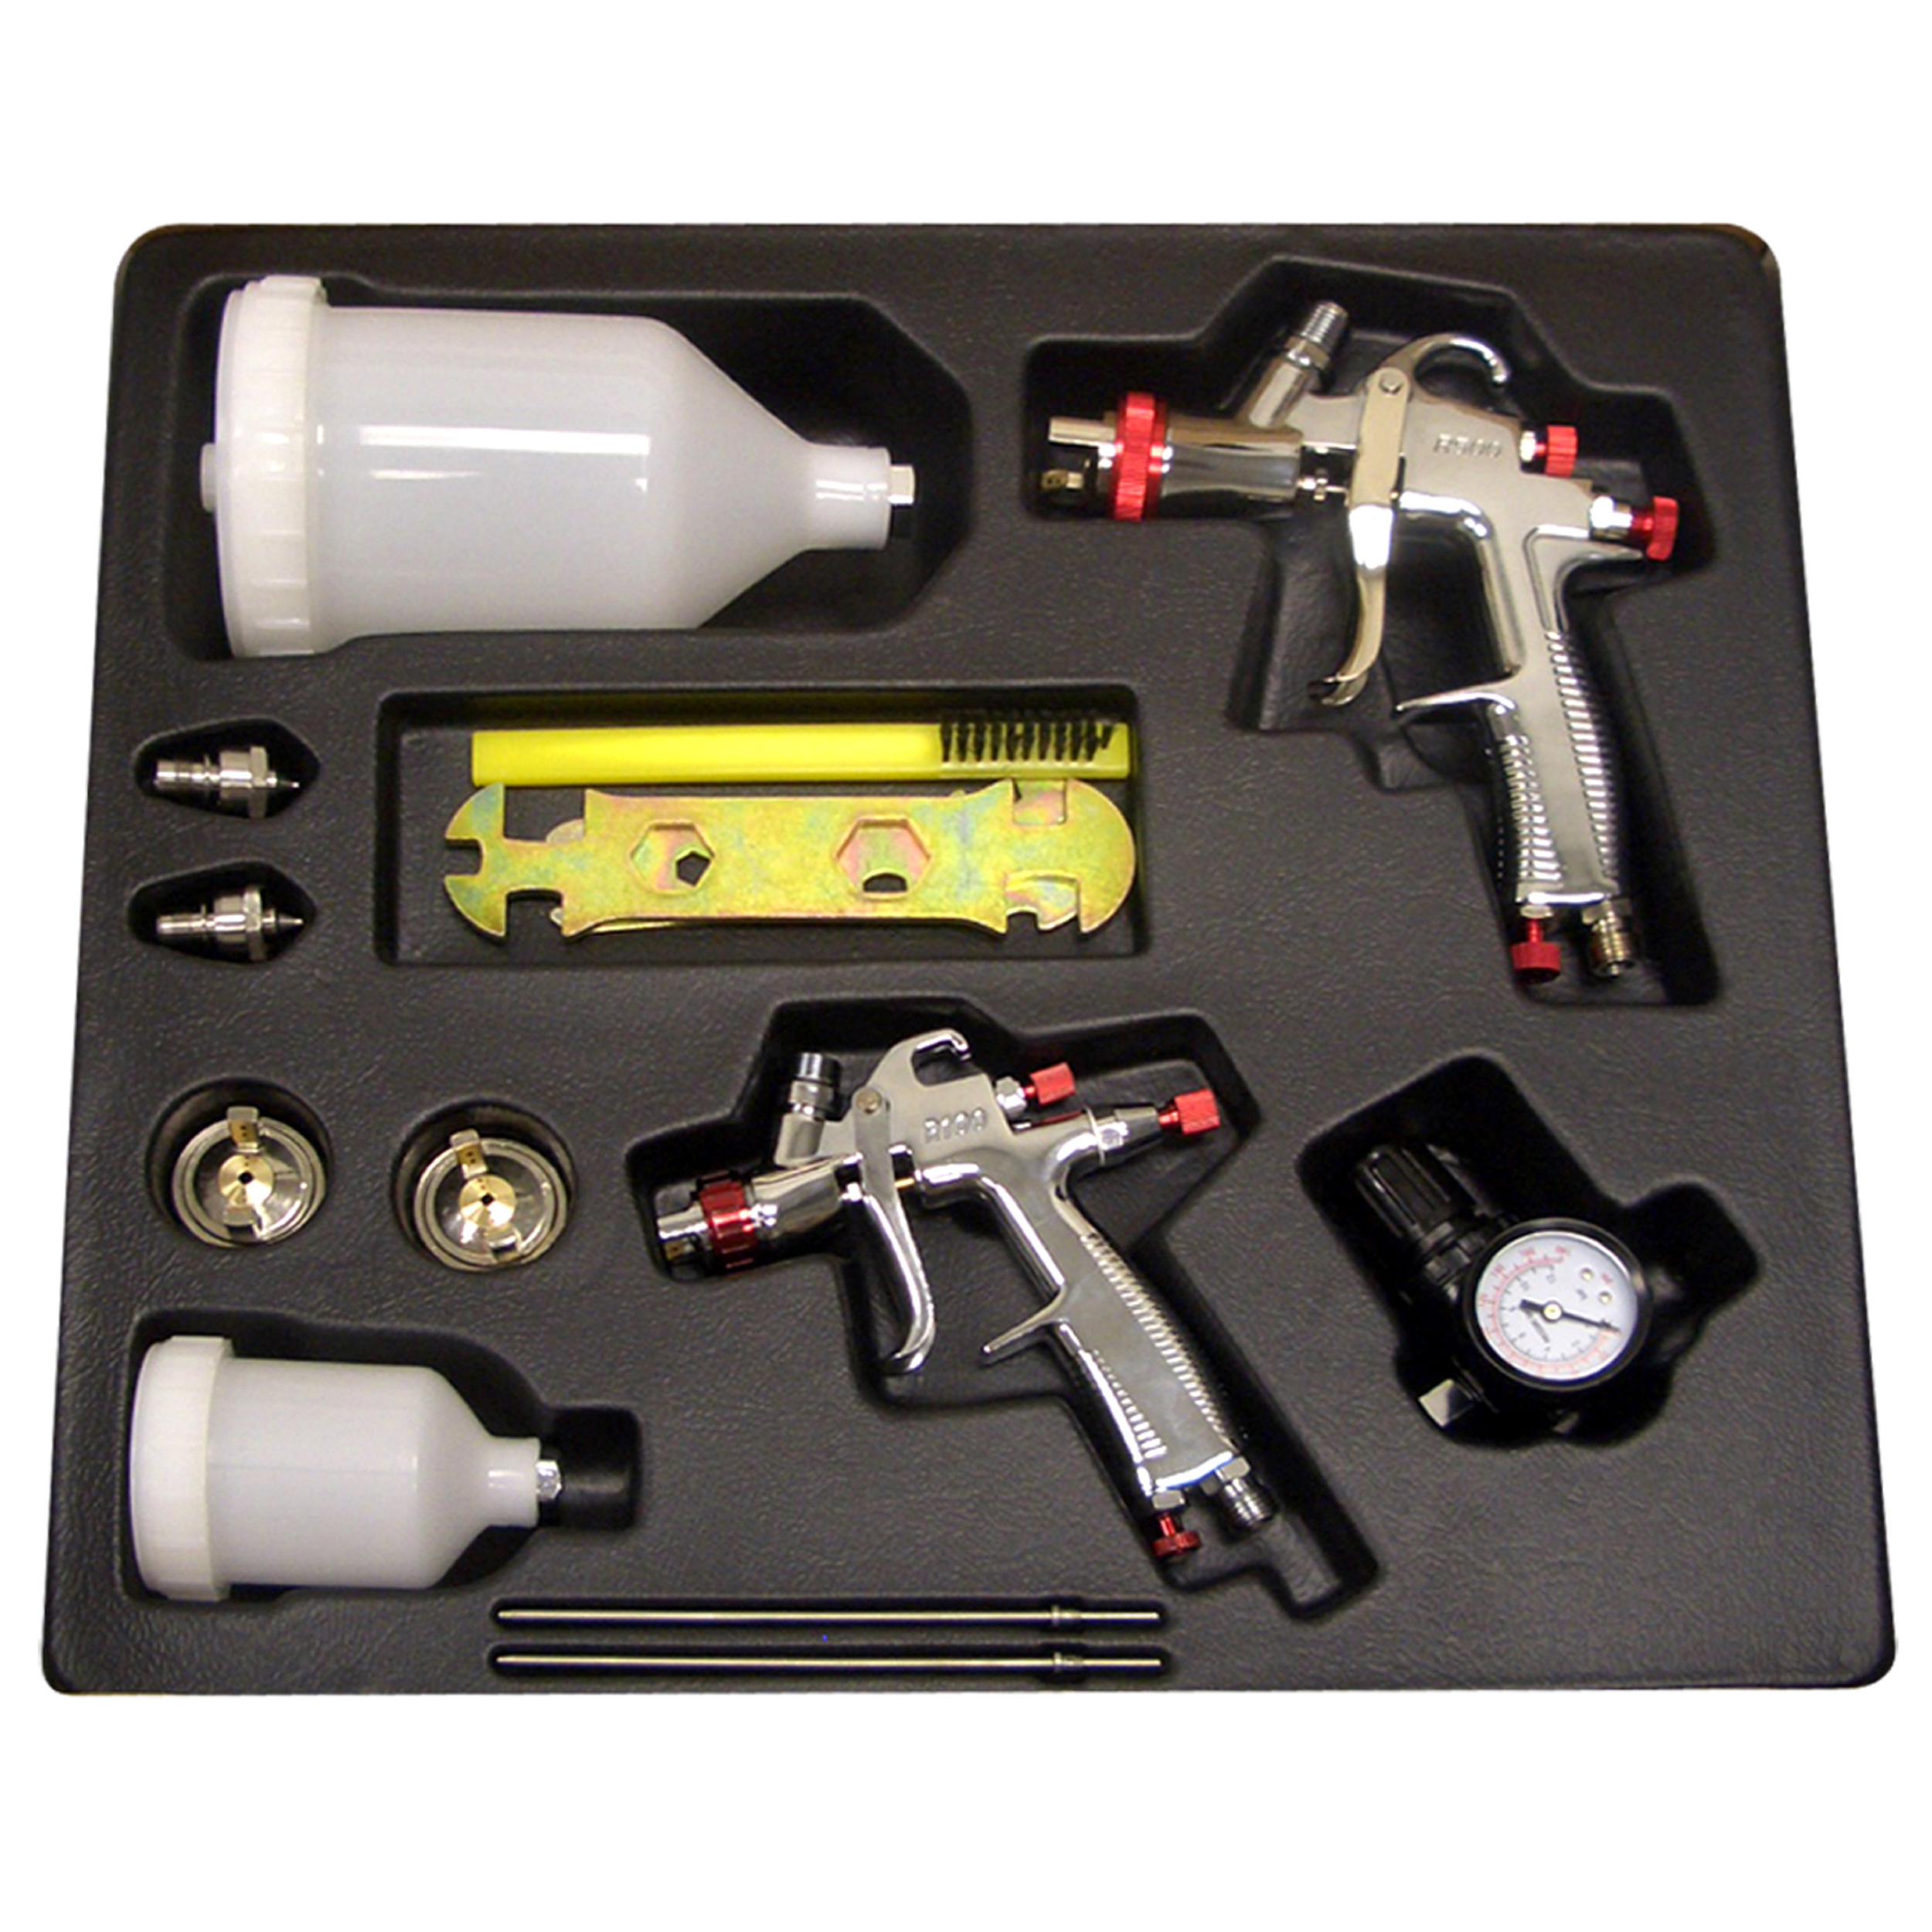 Sp-33500 Lvlp Gravity Feed Spray Gun Kit